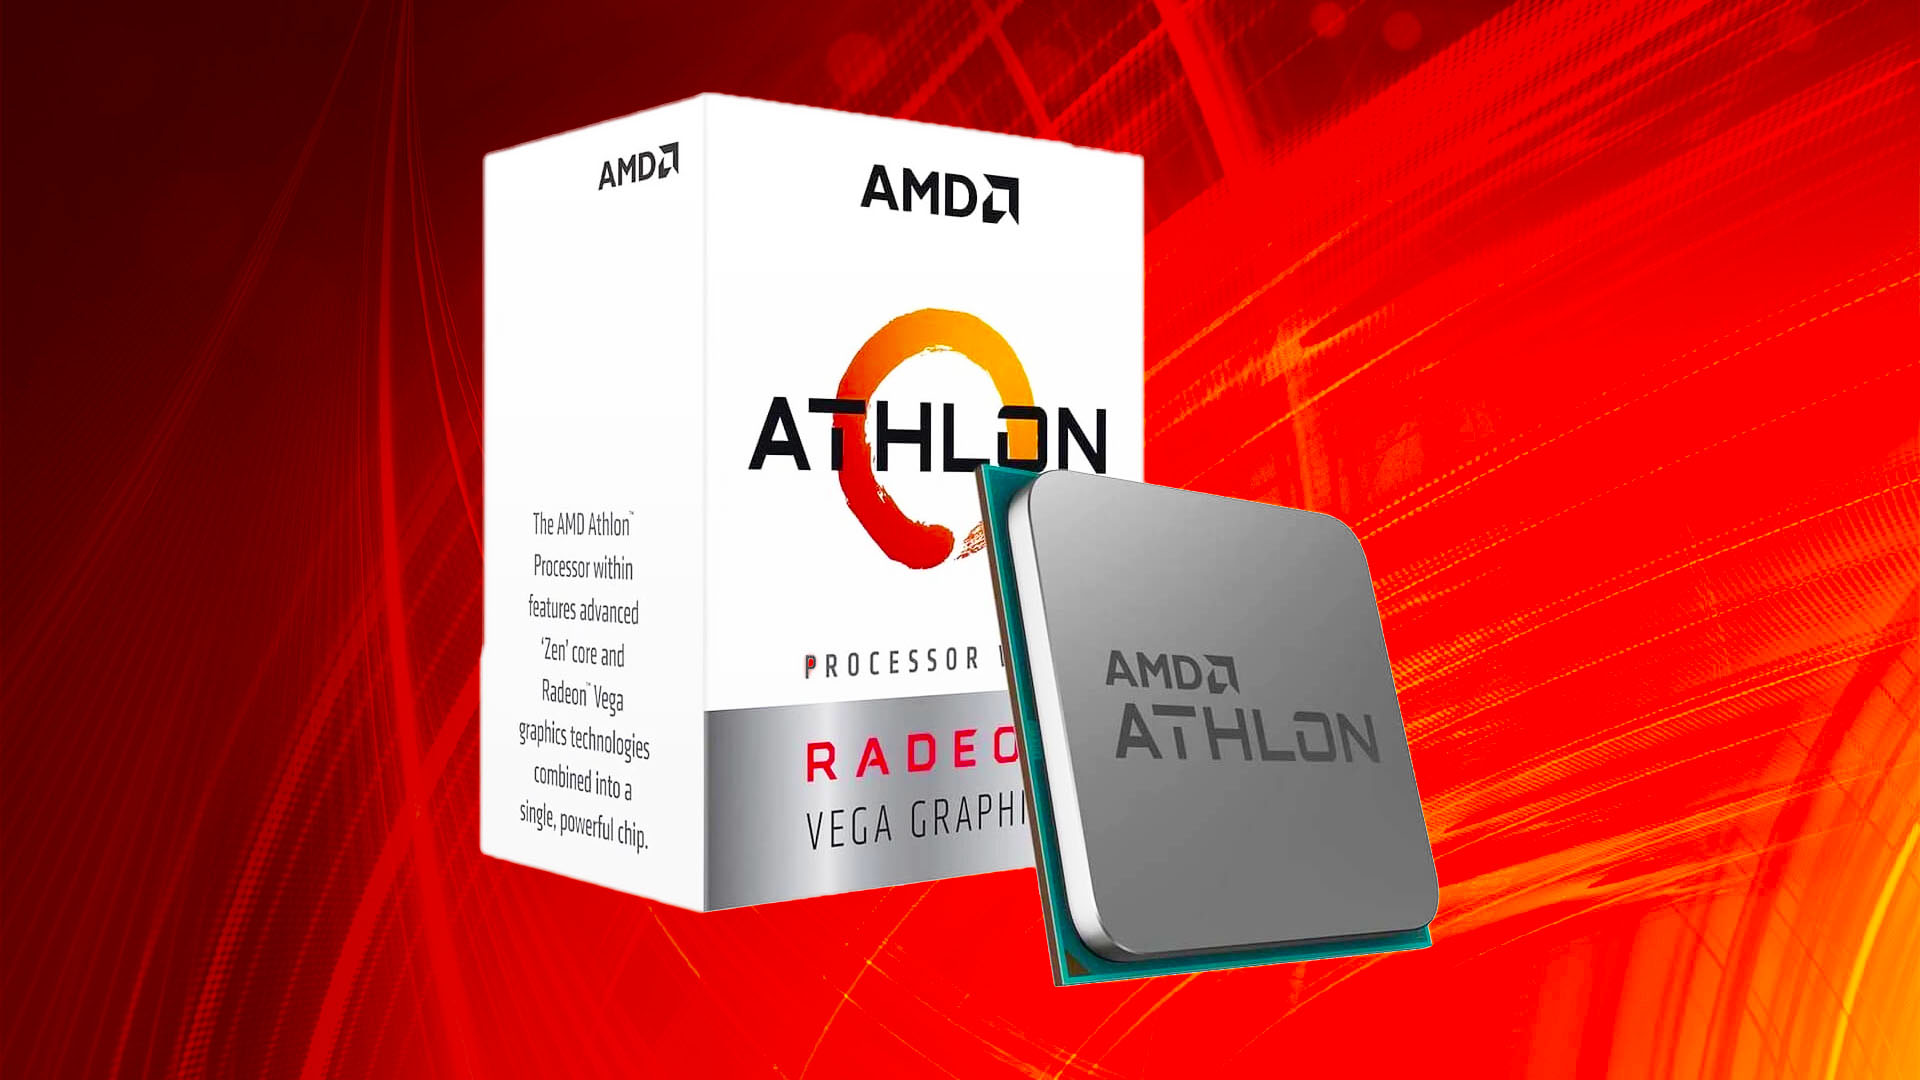 AMD Athlon CPU with Zen core and Radeon Vega GPU